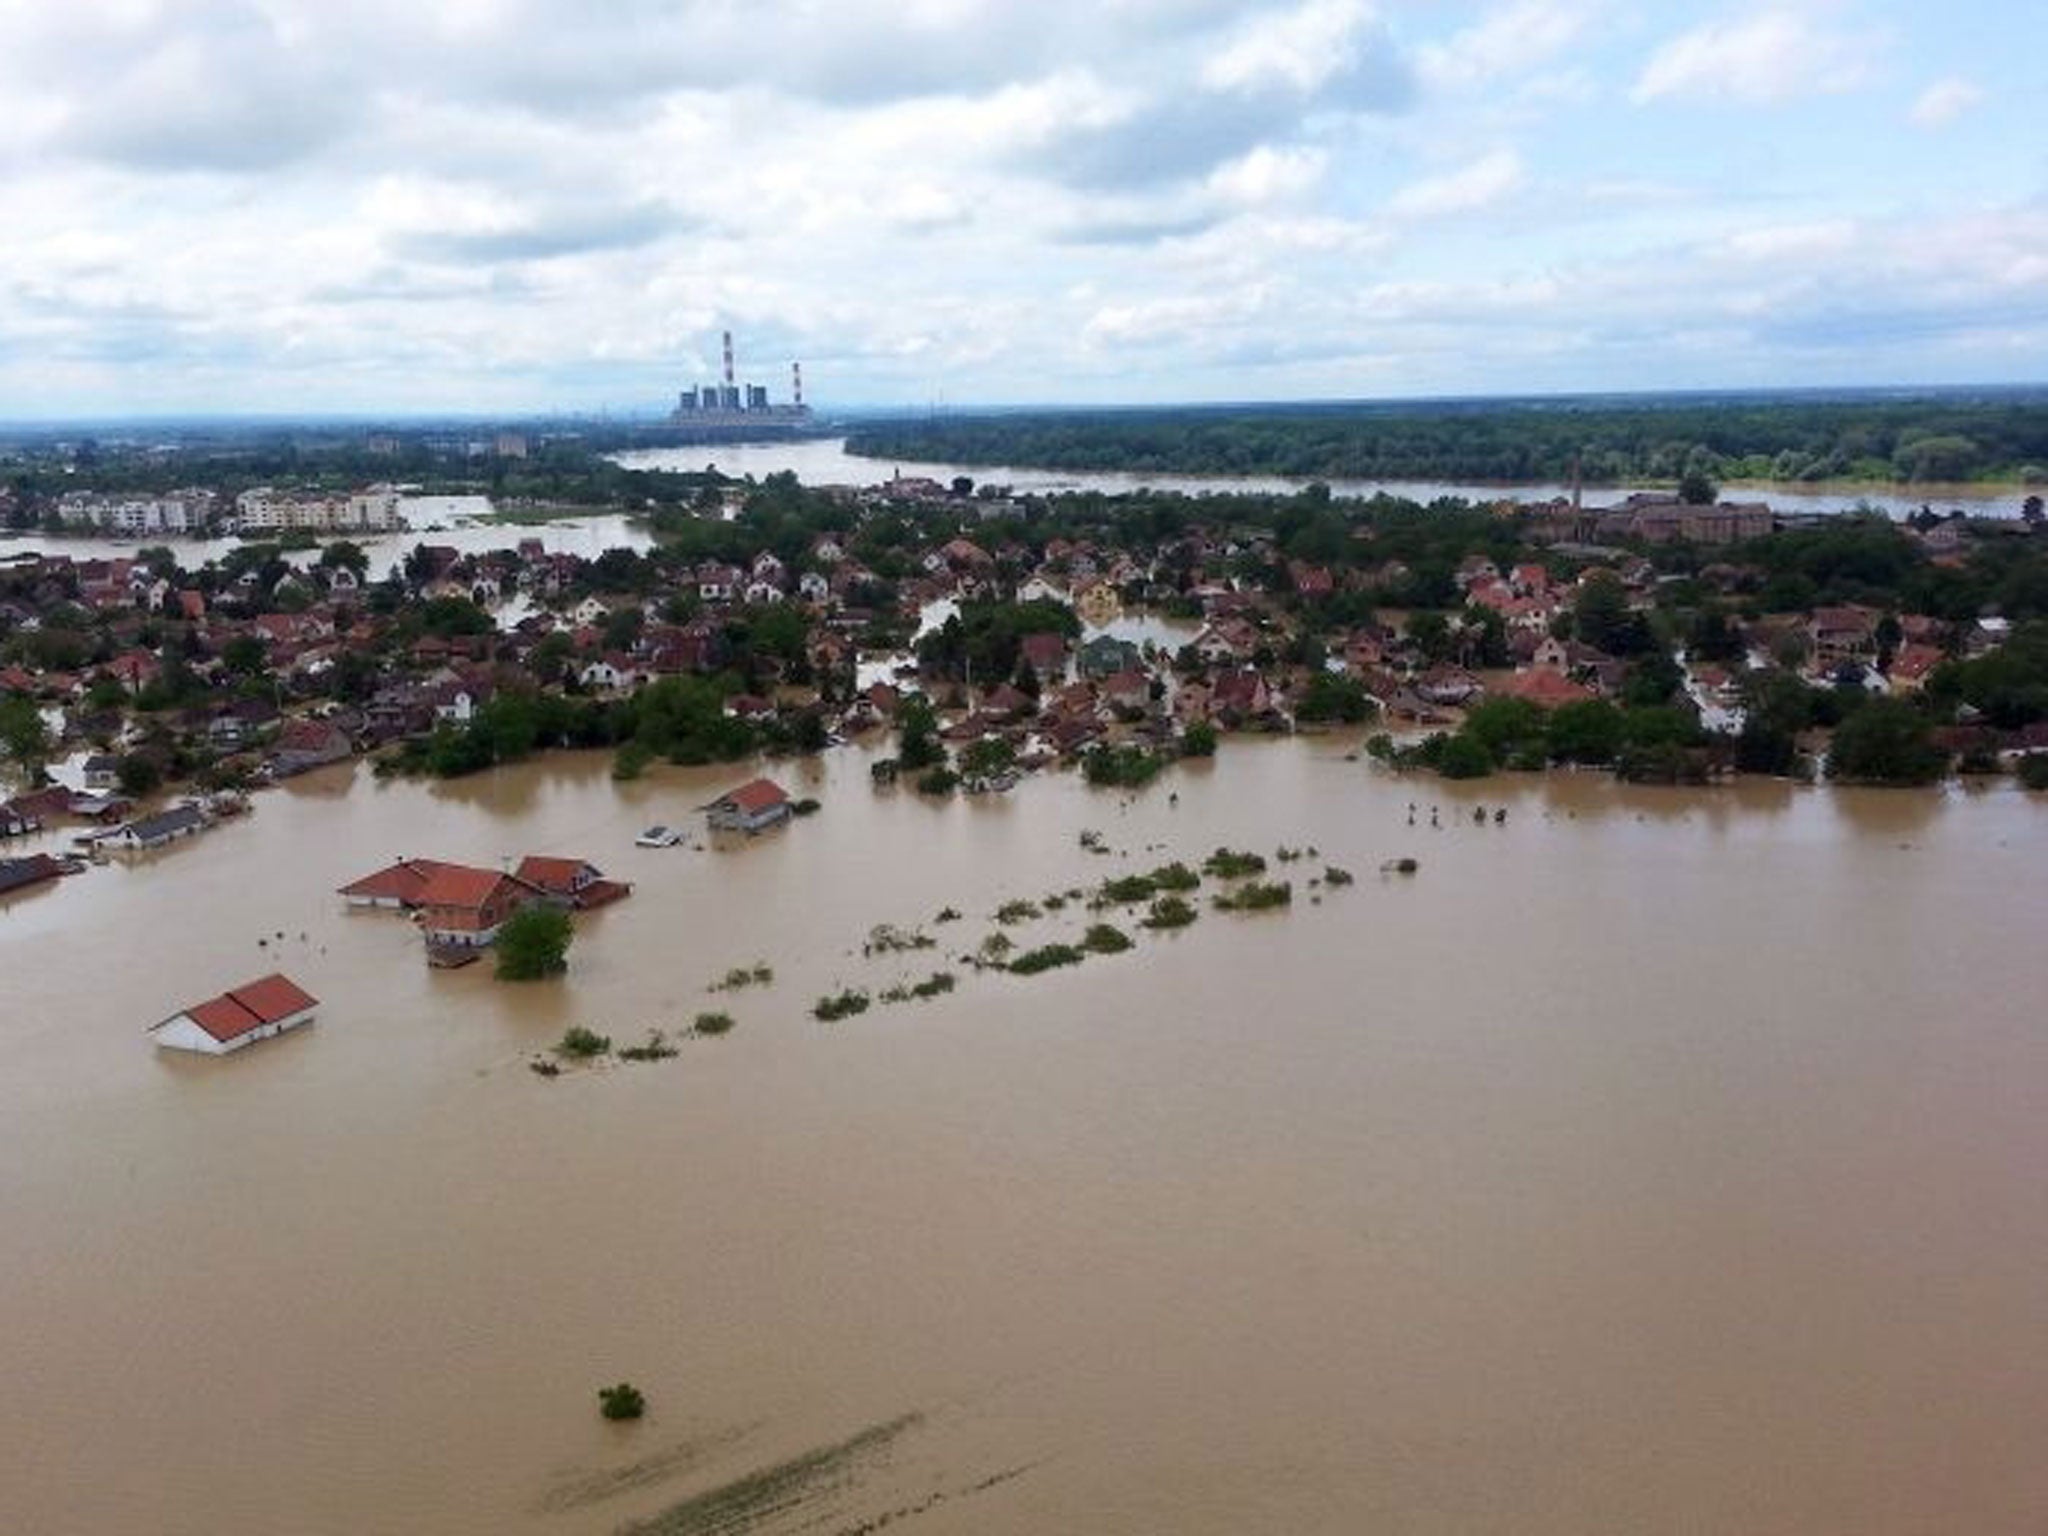 The flooded area in Obrenovac, some 30 kilometers (18 miles) southwest of Belgrade, Serbia